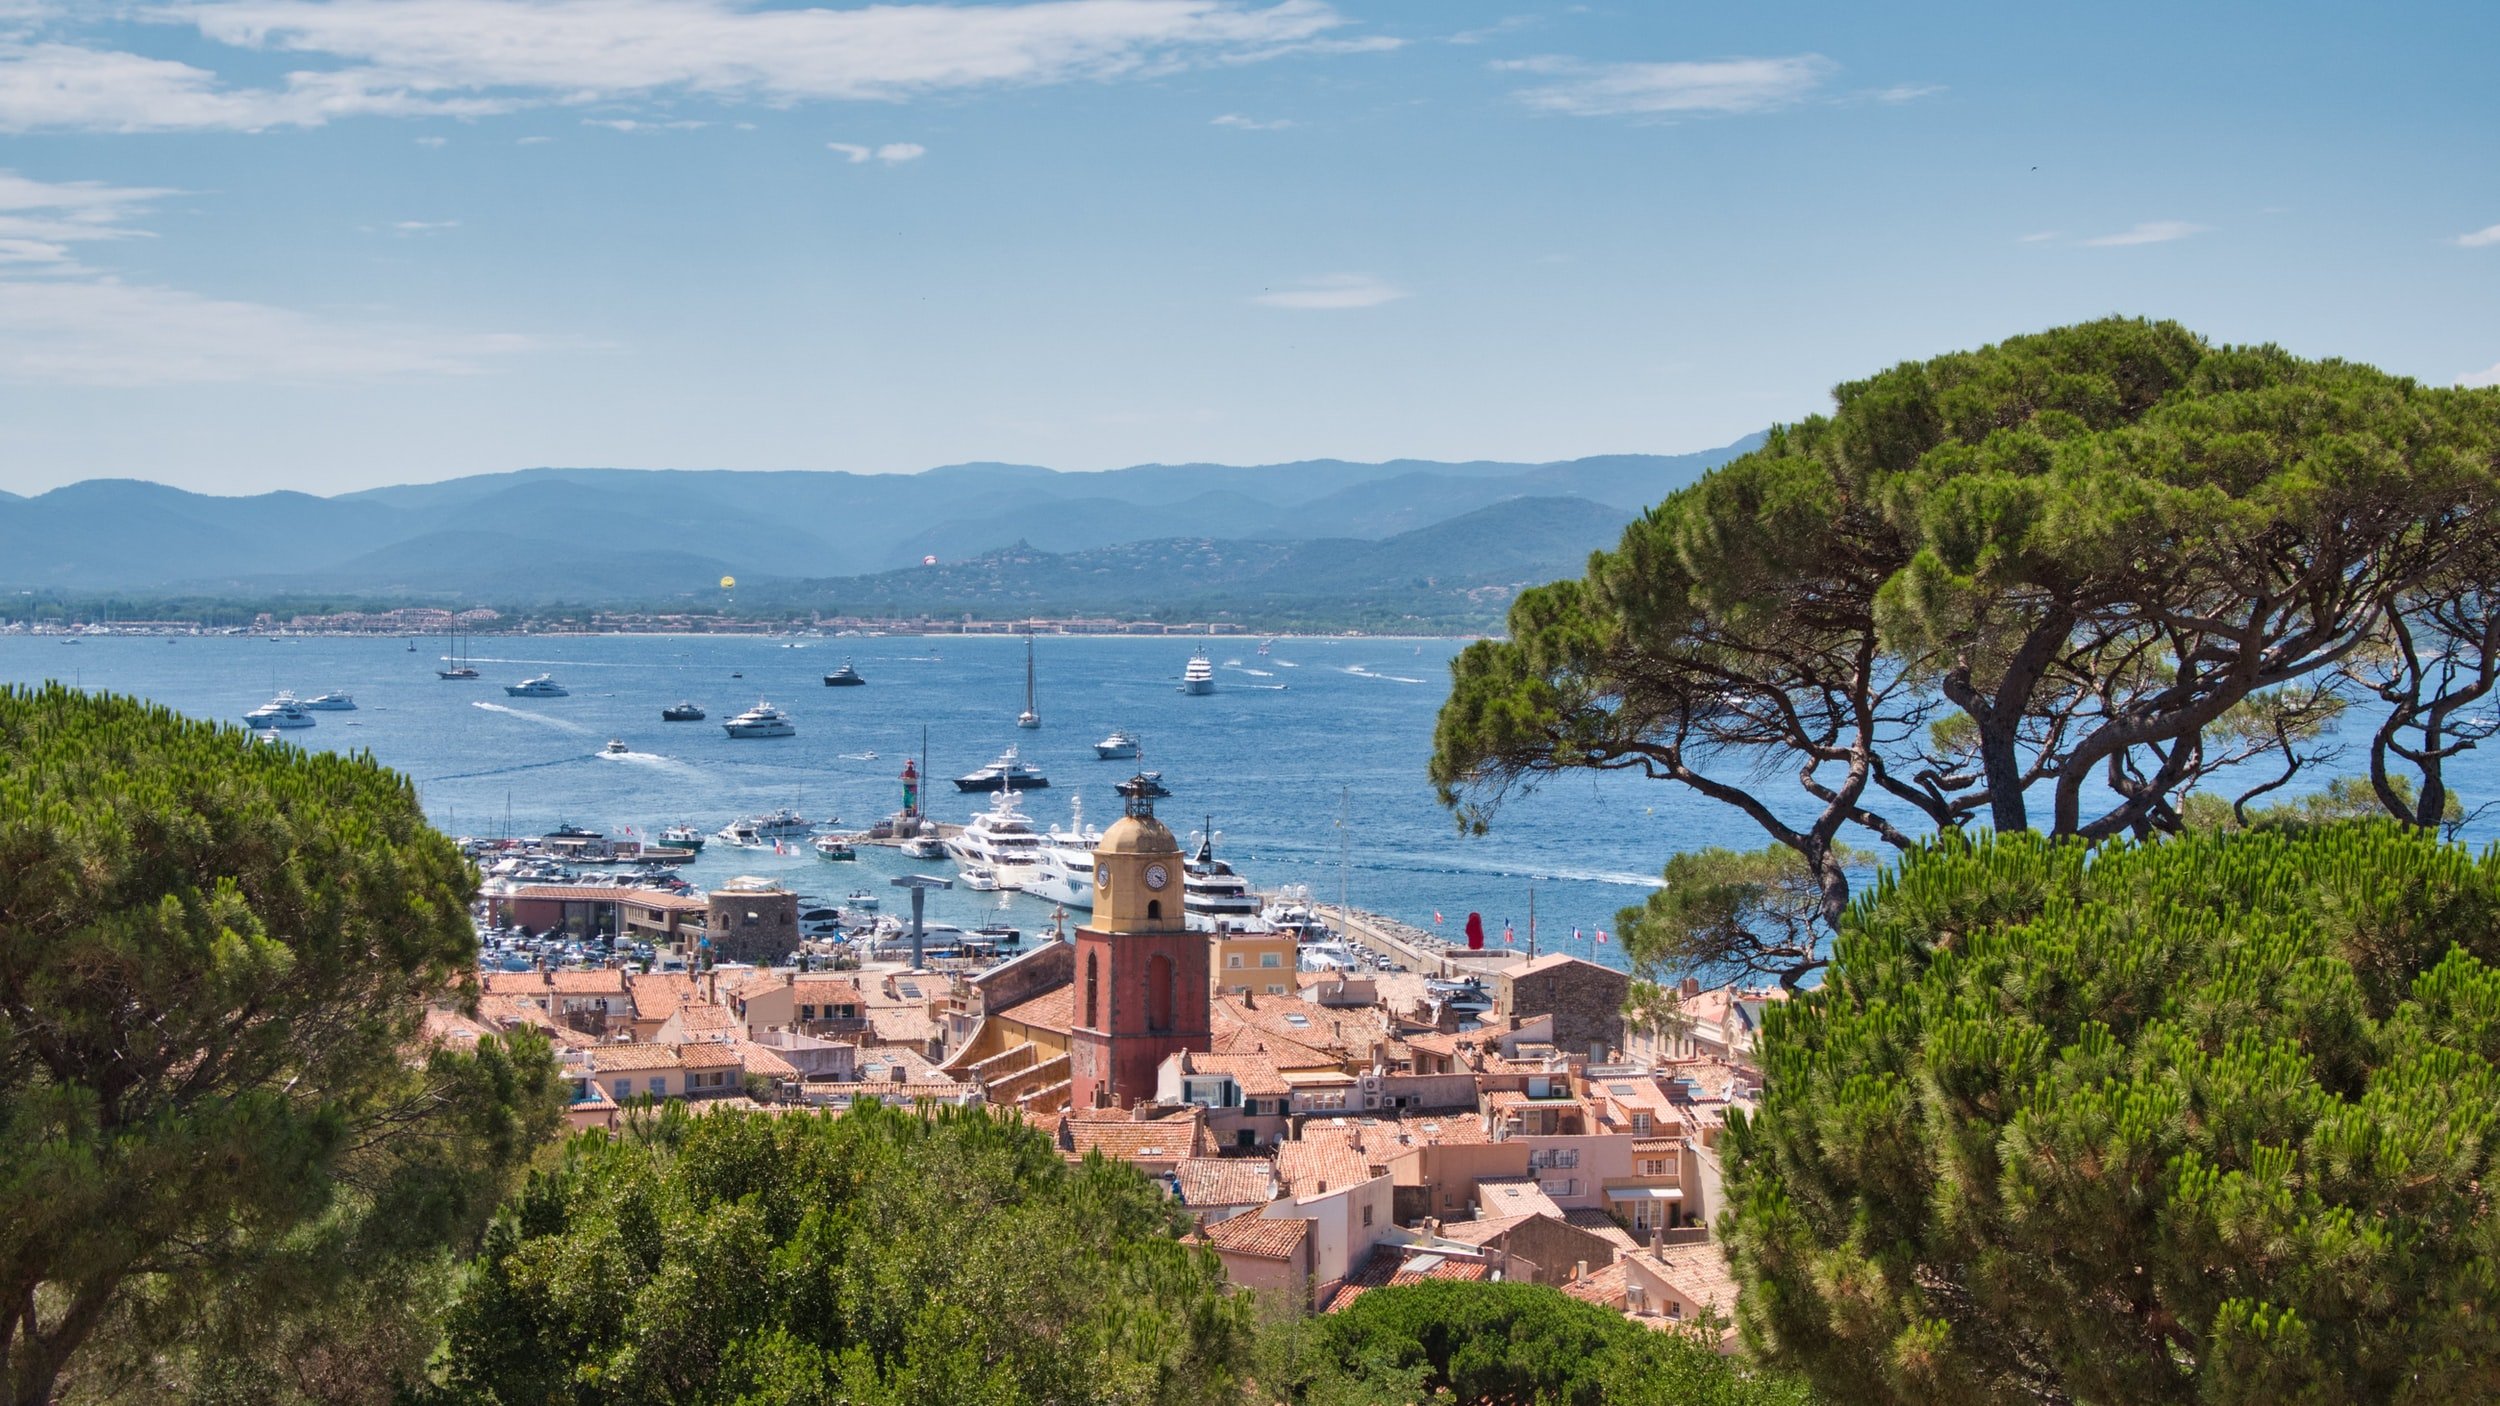 Exceptional villa and visit to Saint-Tropez on the Mediterranean coast